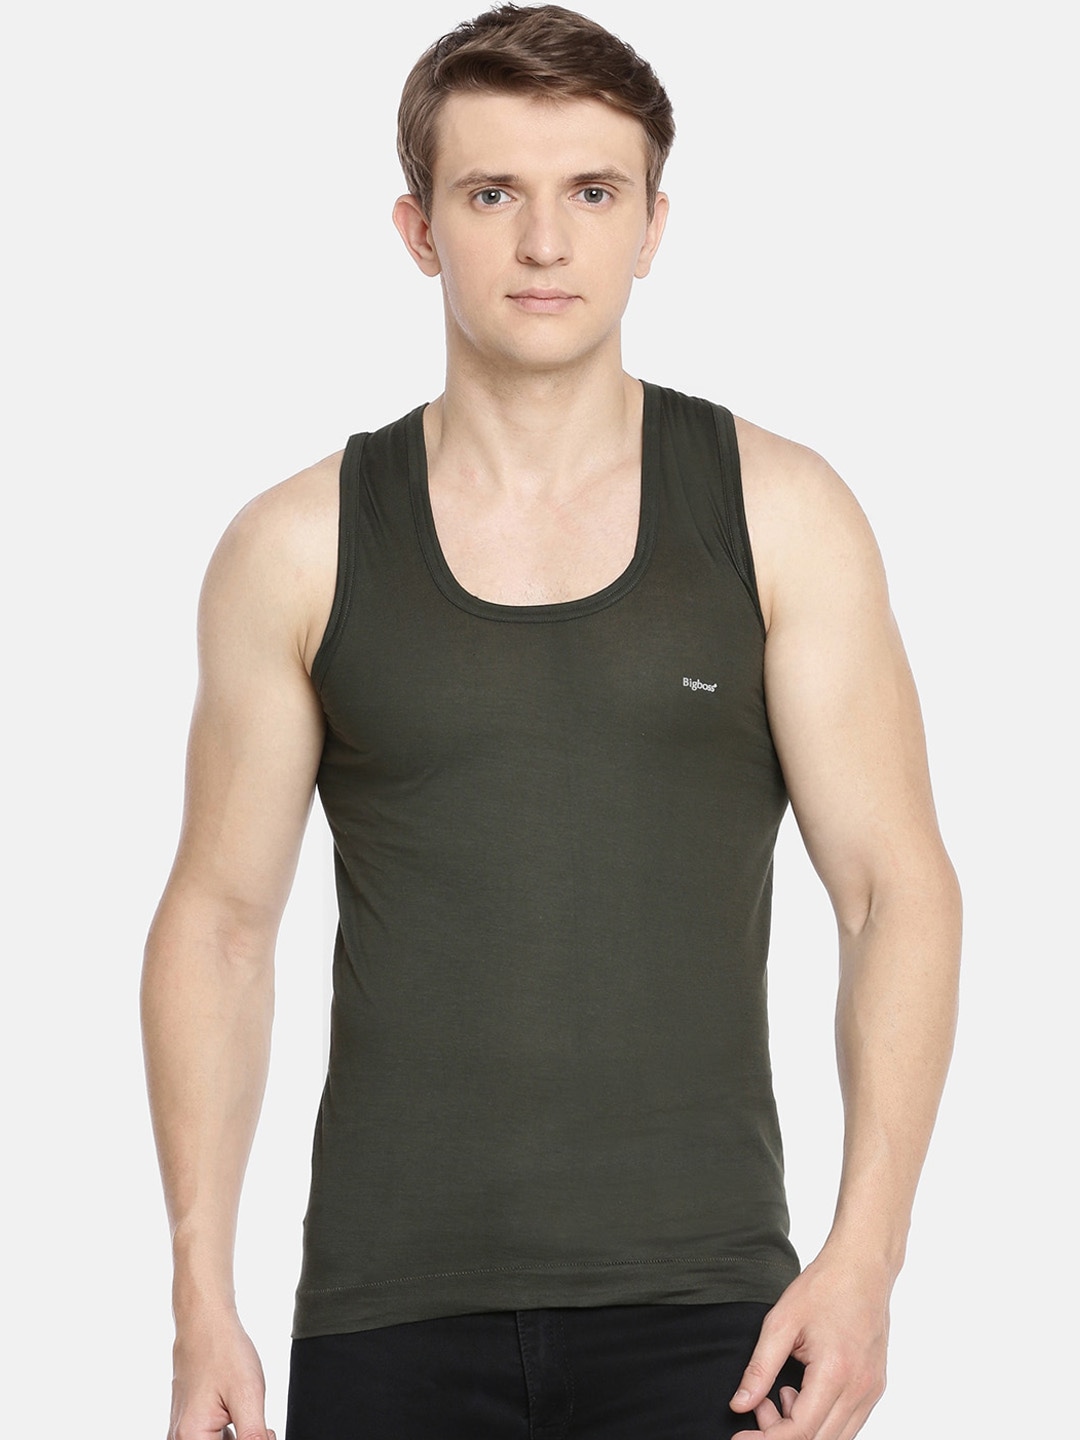 Clothing Innerwear Vests | Dollar Bigboss Men Pack Of 5 Assorted Solid Cotton Innerwear Gym Vests - PZ11443